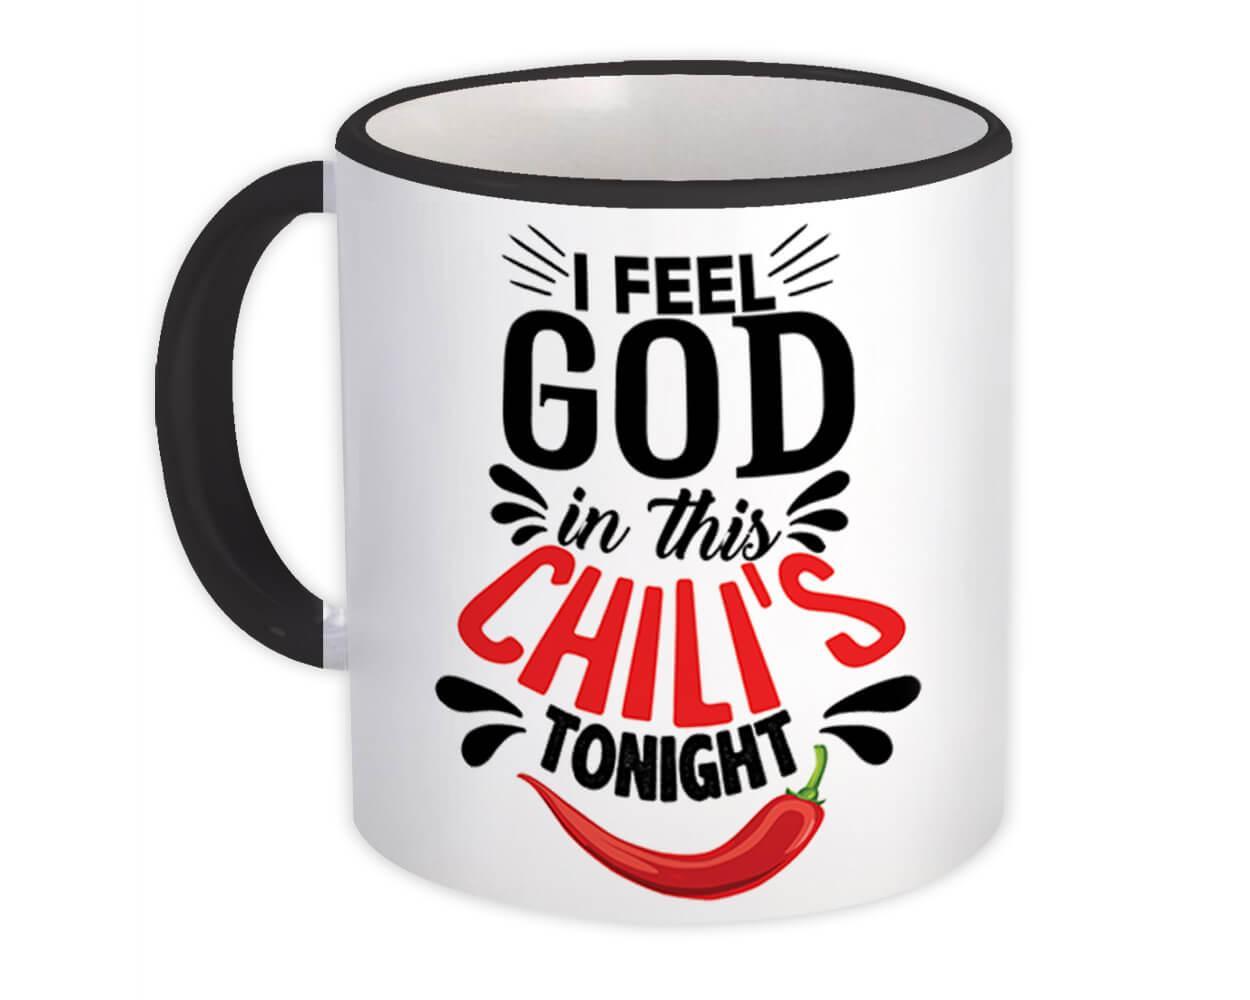 GOD In Chilis Tonight : Gift Mug Meme Parody Funny - $15.90